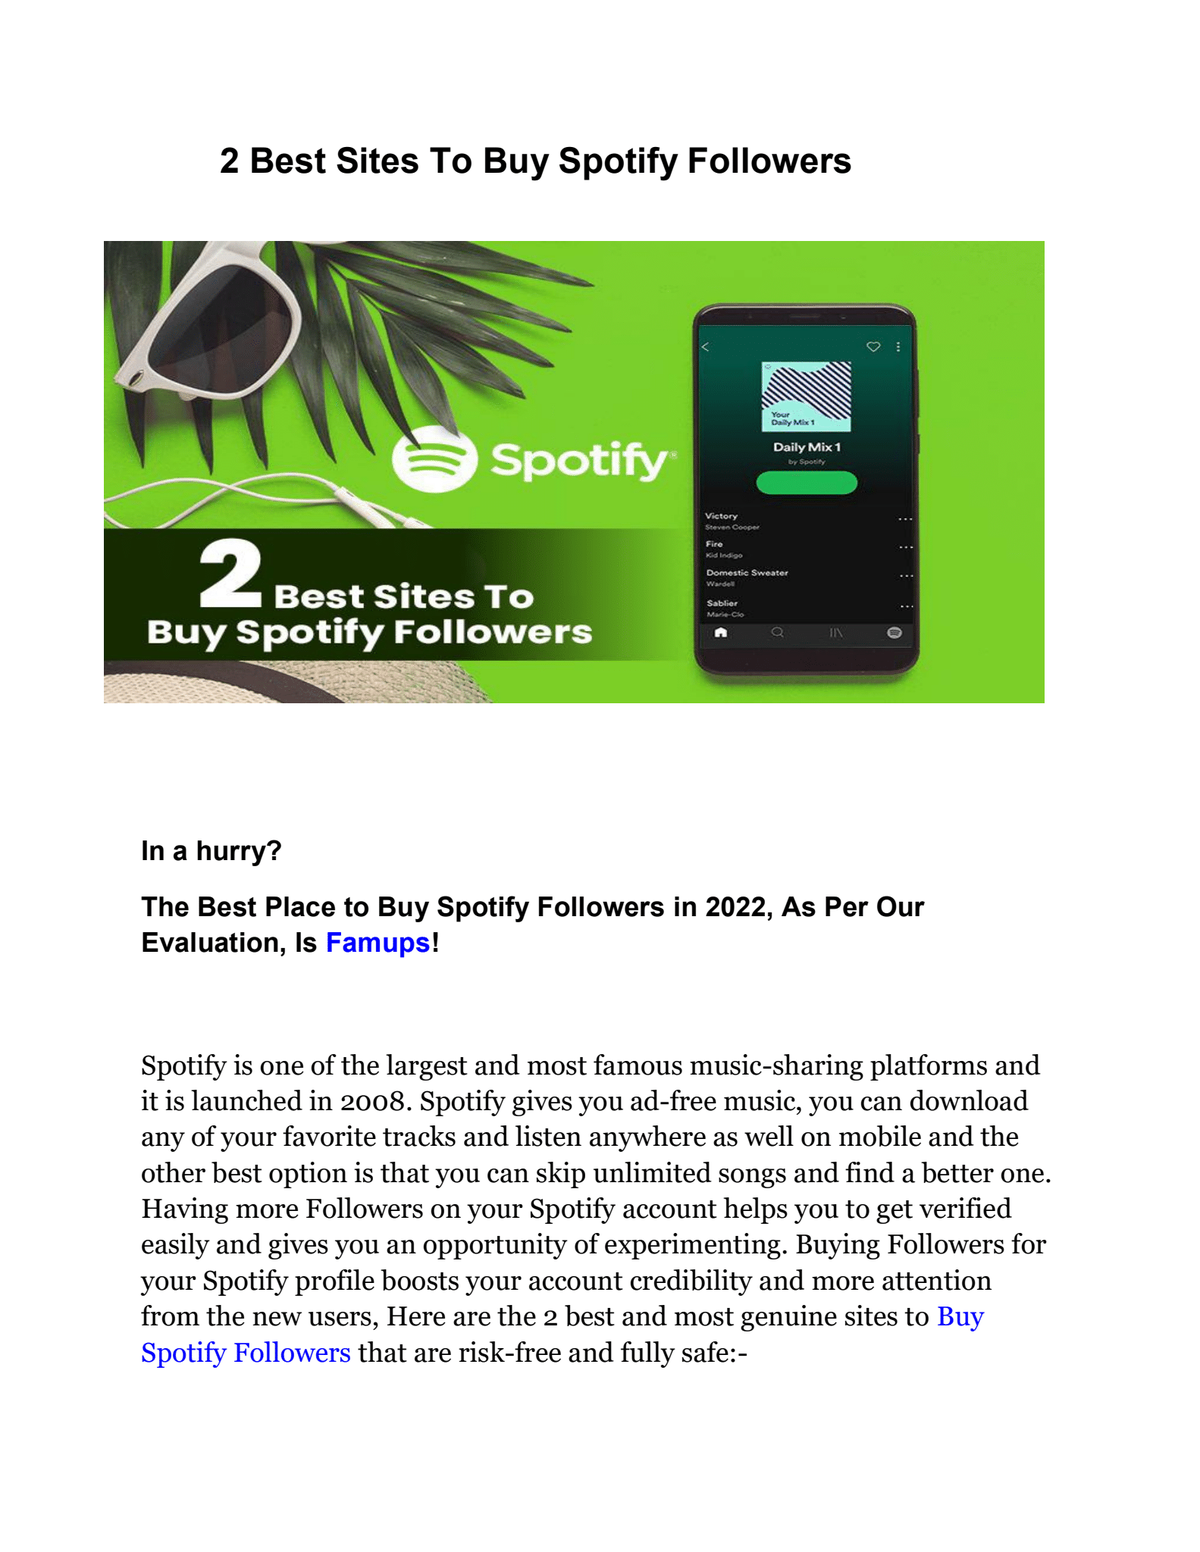 Dropbox - 2 Best Sites To Buy Spotify Followers.pdf - Simplify your life